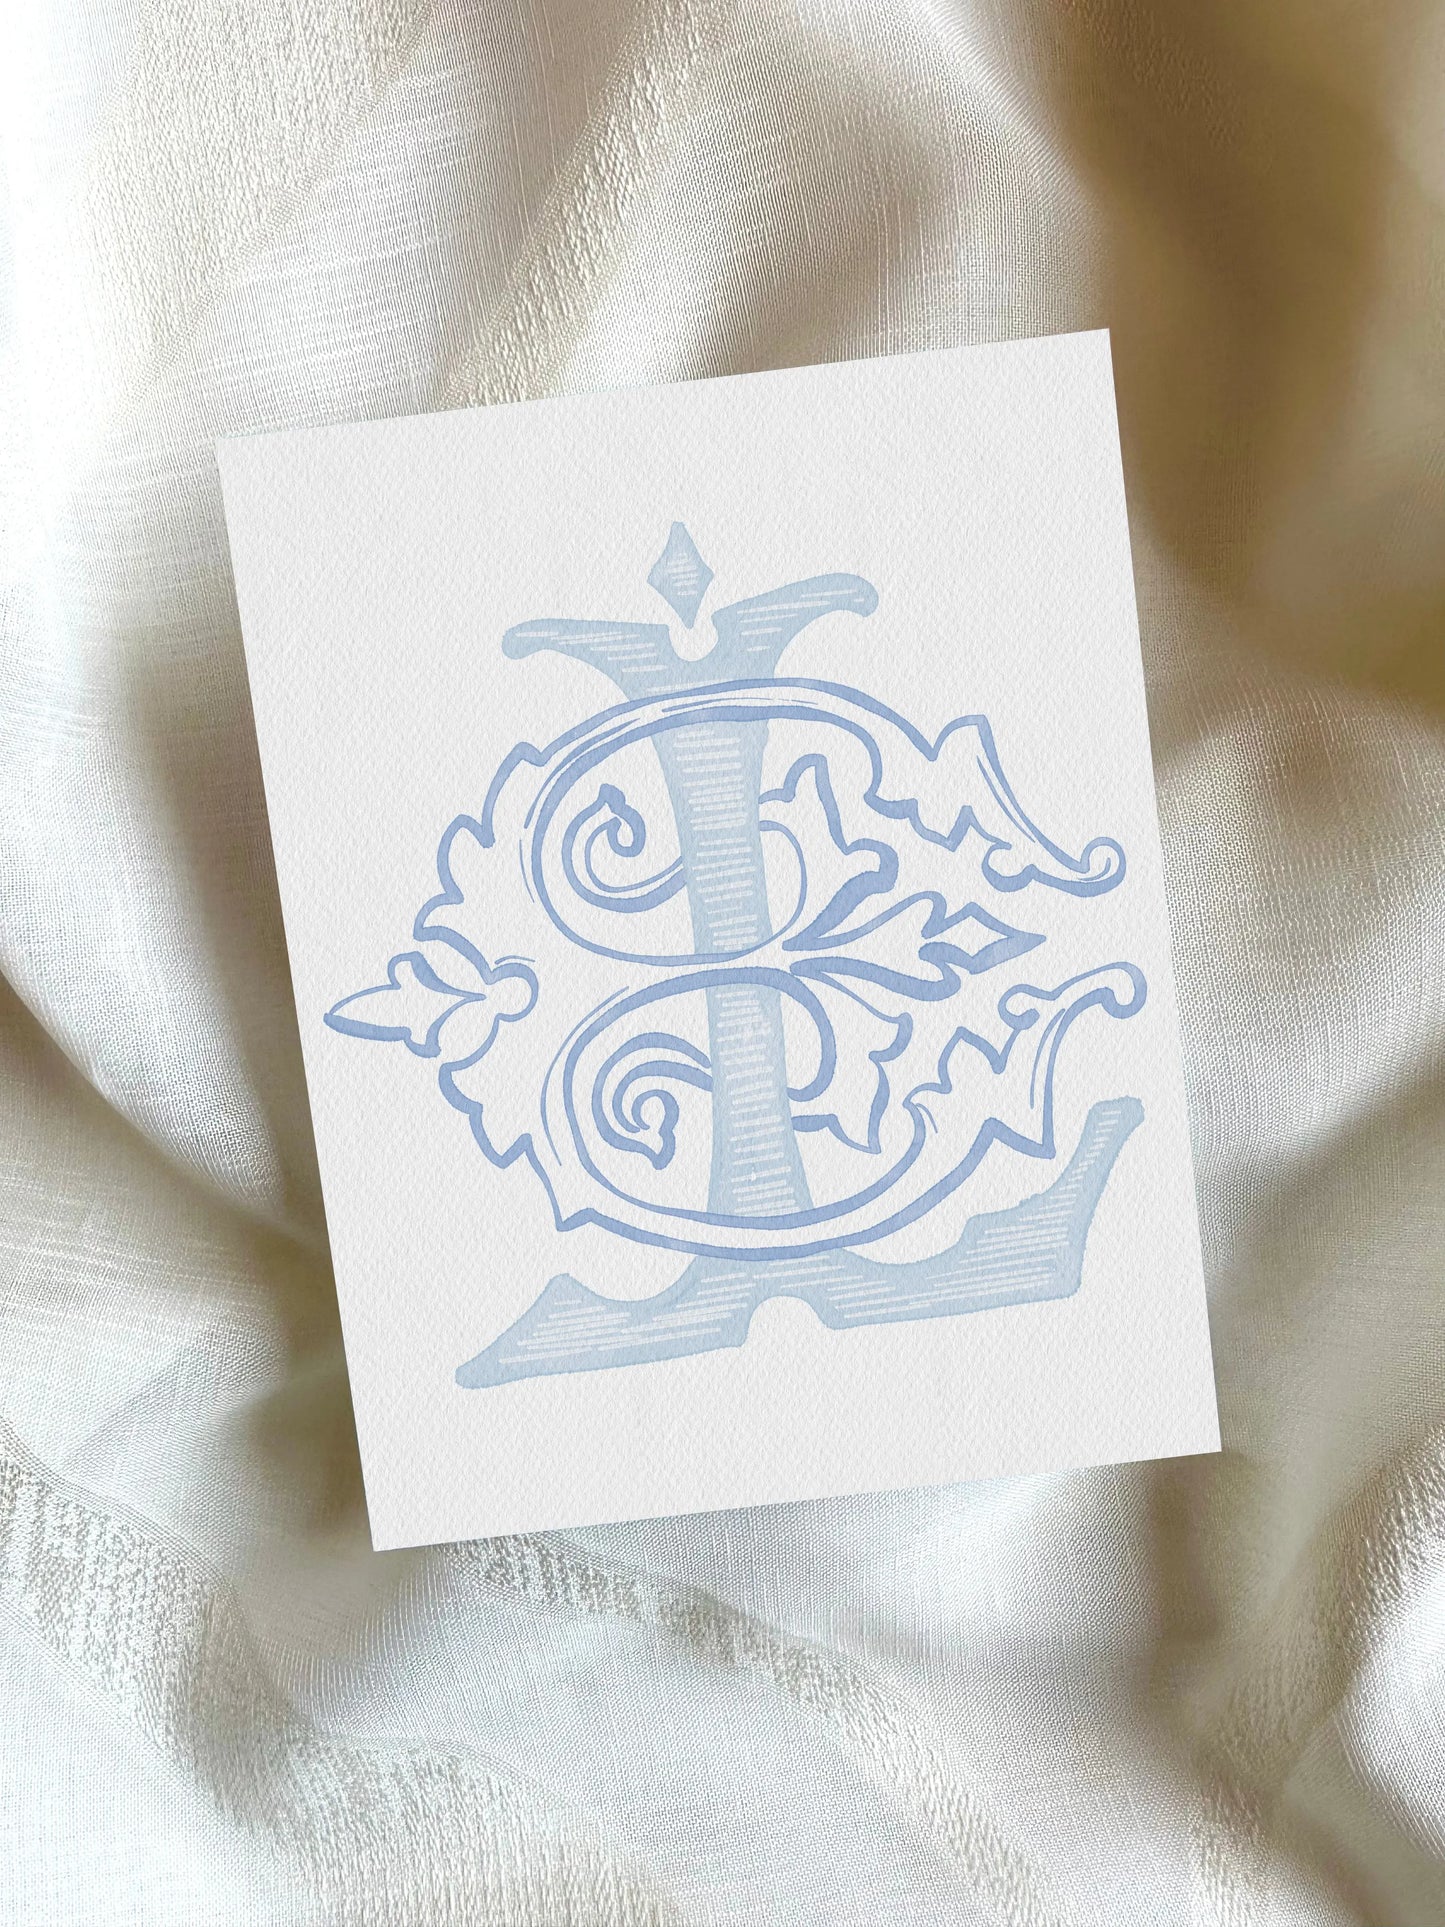 2 Letter Monogram with Letters LE | Digital Download - Wedding Monogram SVG, Personal Logo, Wedding Logo for Wedding Invitations The Wedding Crest Lab